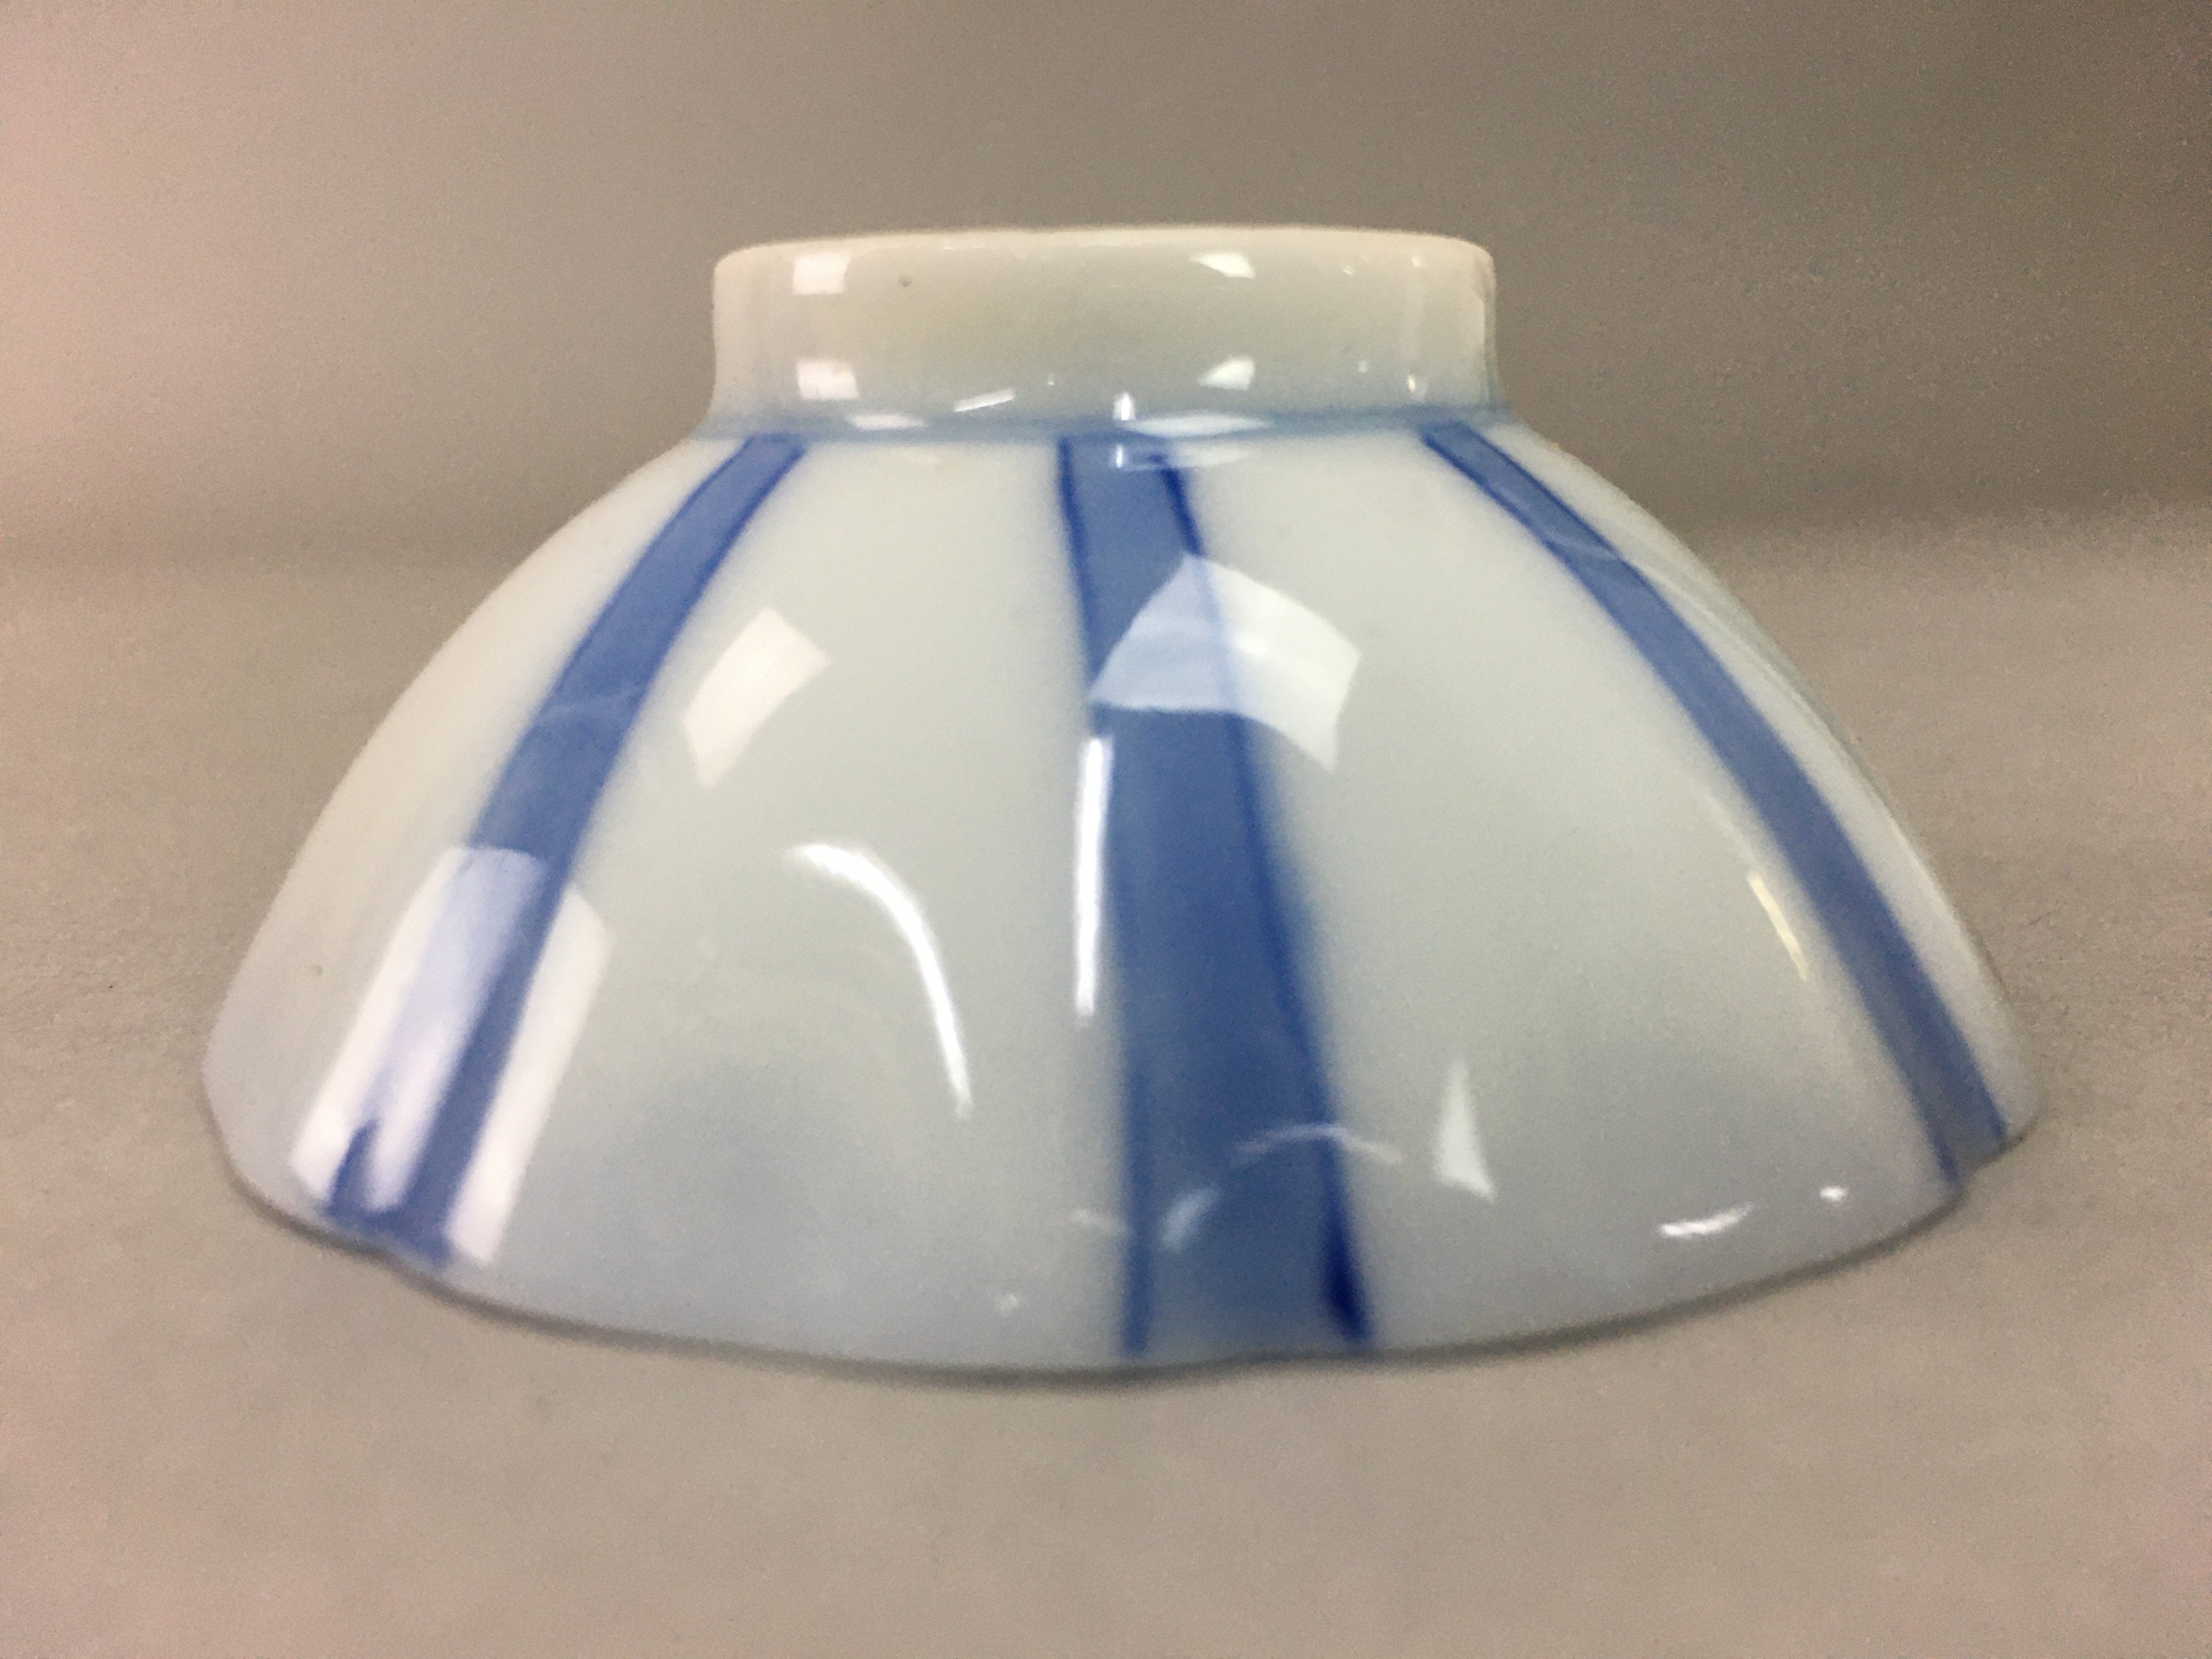 Japanese Porcelain Small Bowl Vtg Kozara Blue White Soy Sauce Dipping Dish PP45